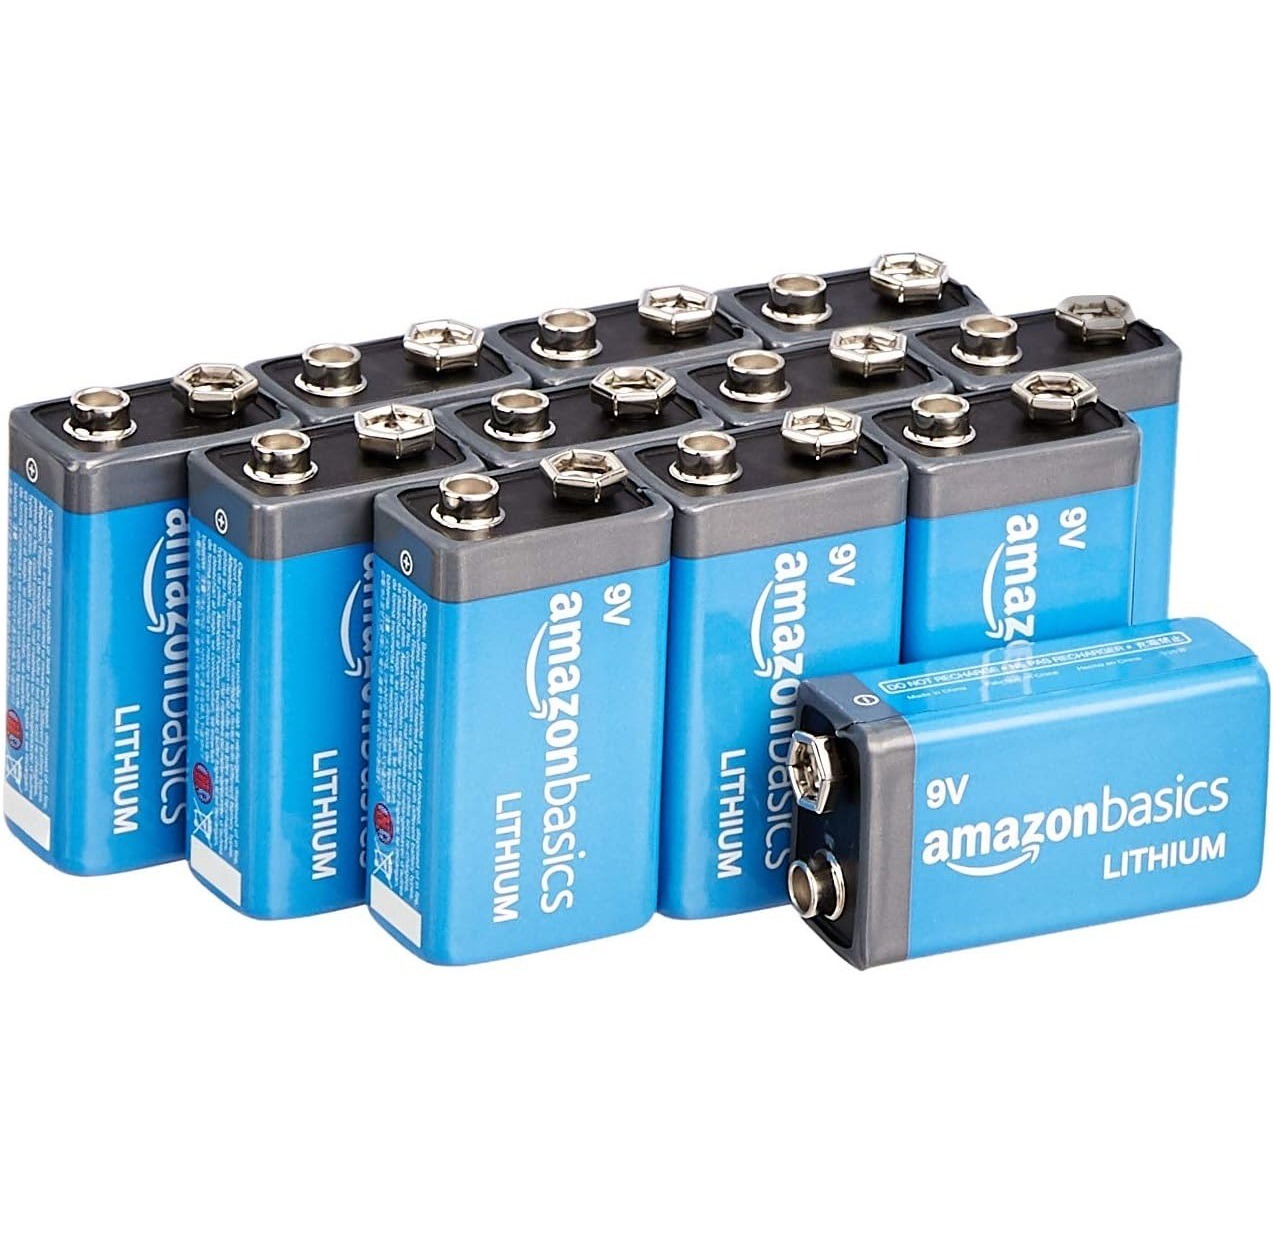 Amazon Basics 12-Pack Lithium 9V High-Performance Batteries w/ 10-Year Shelf Life $20 + Free Shipping